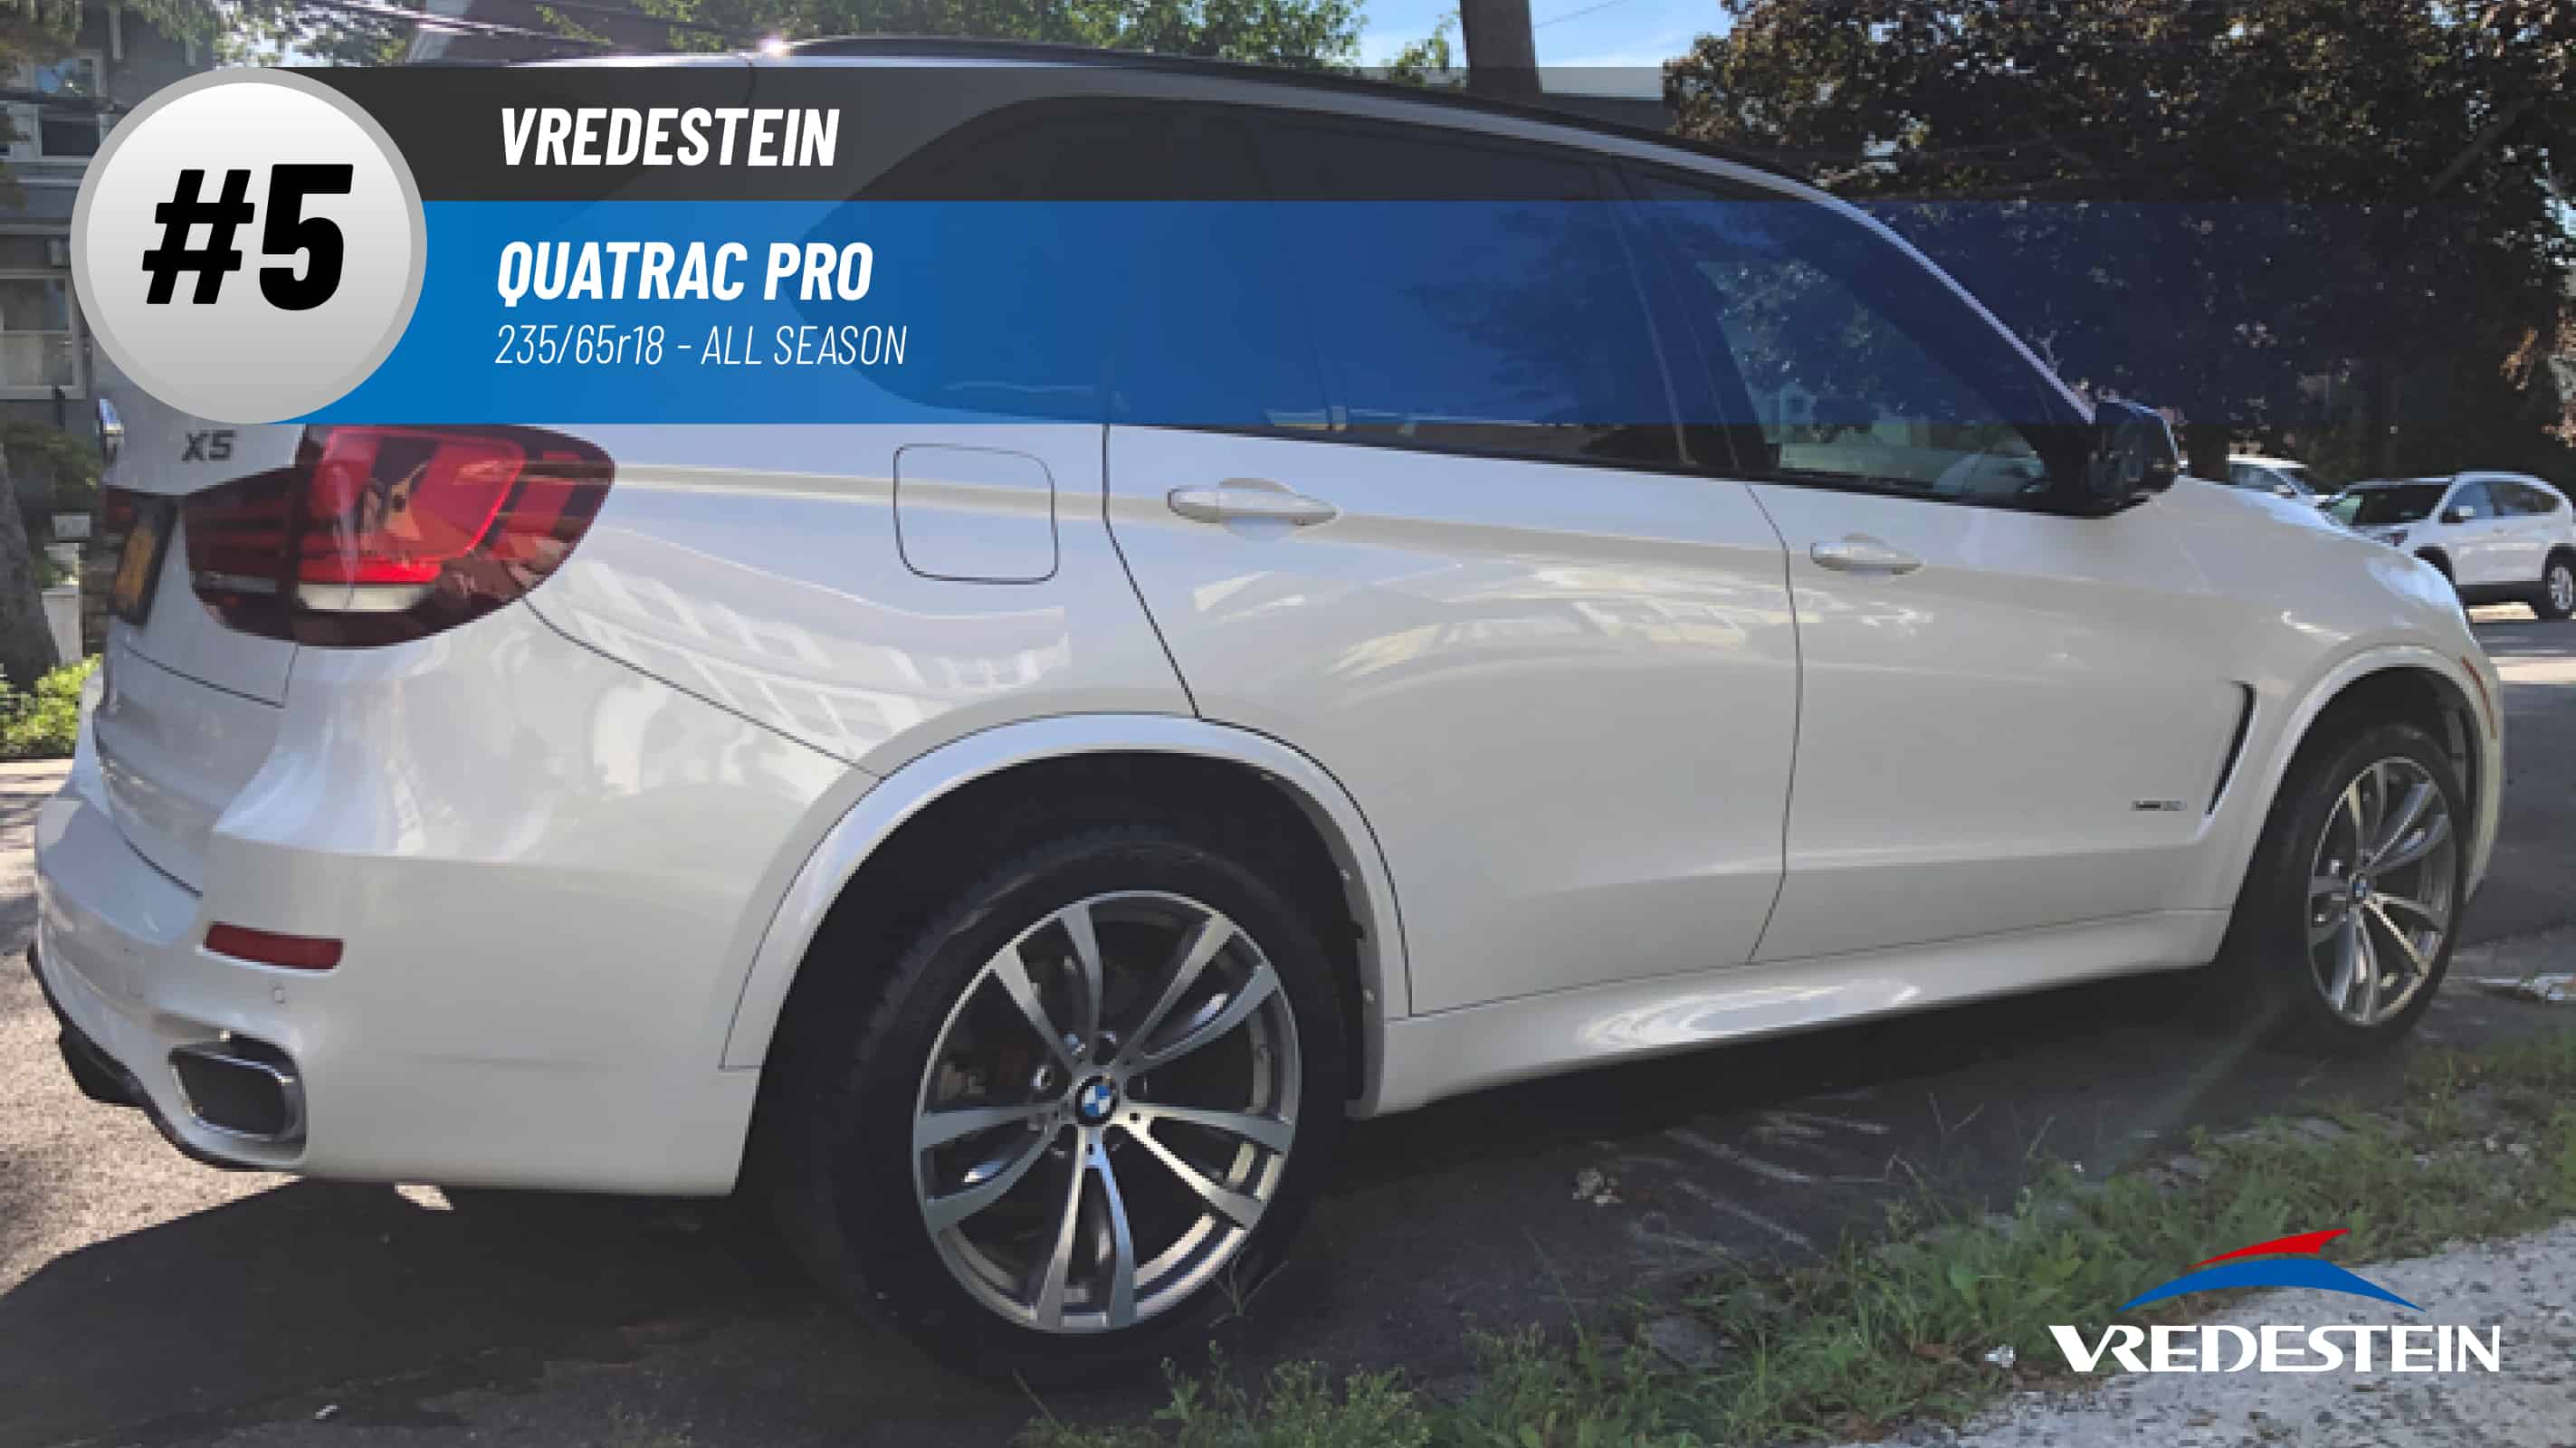 Top #5 All Season Tires: Vredestein Quatrac Pro – 235/65r18